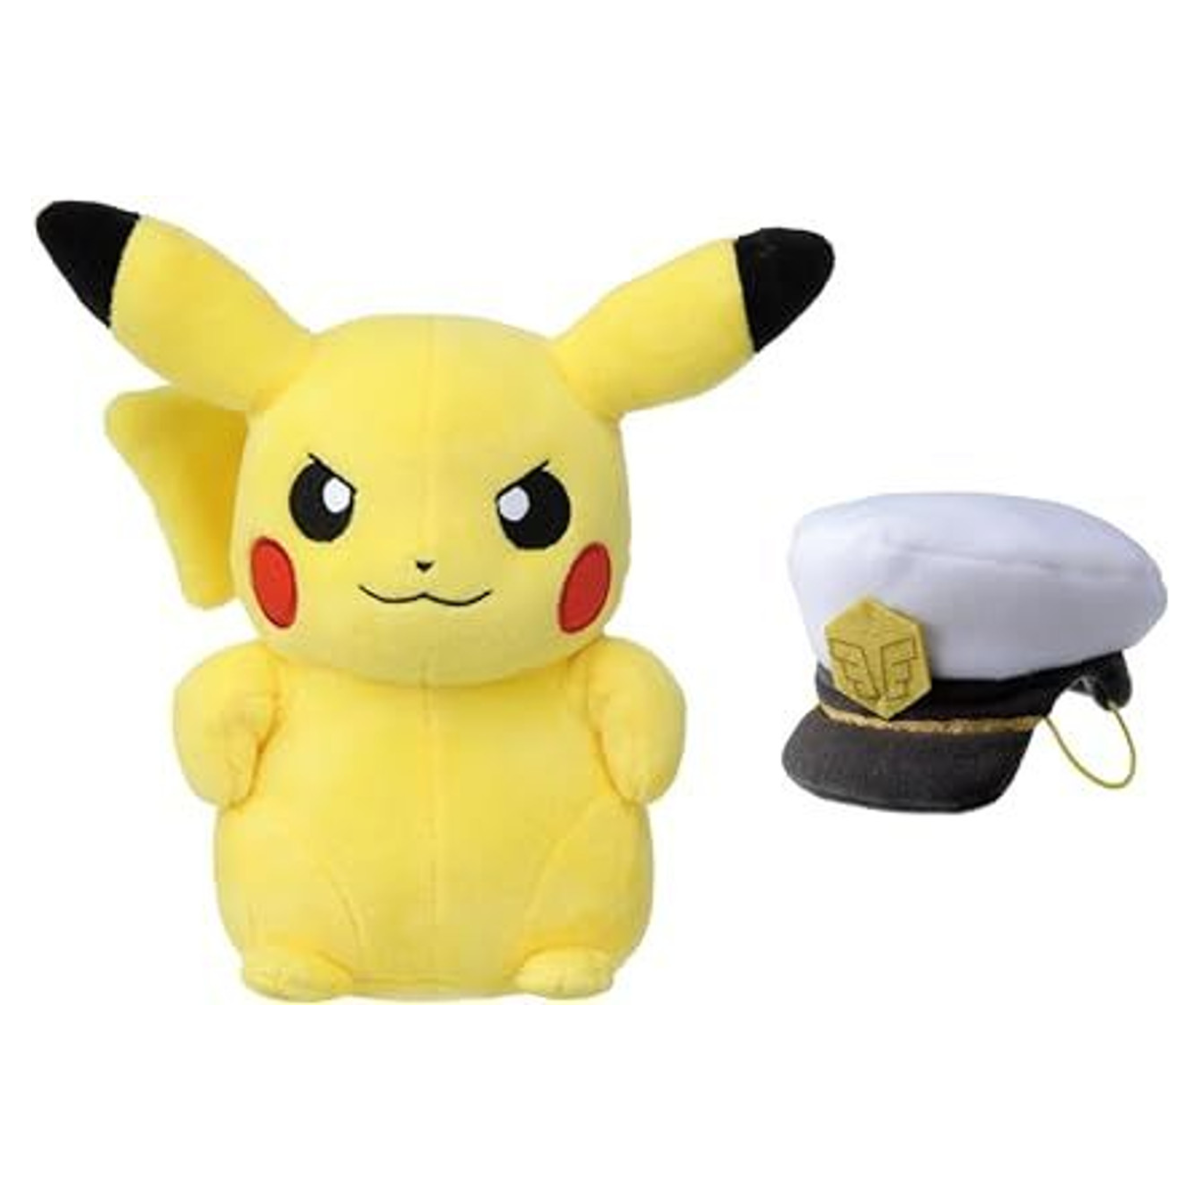 Pokemon Stuffed Plush Toy "Captain Pikachu"-Takara Tomy-Ace Cards & Collectibles